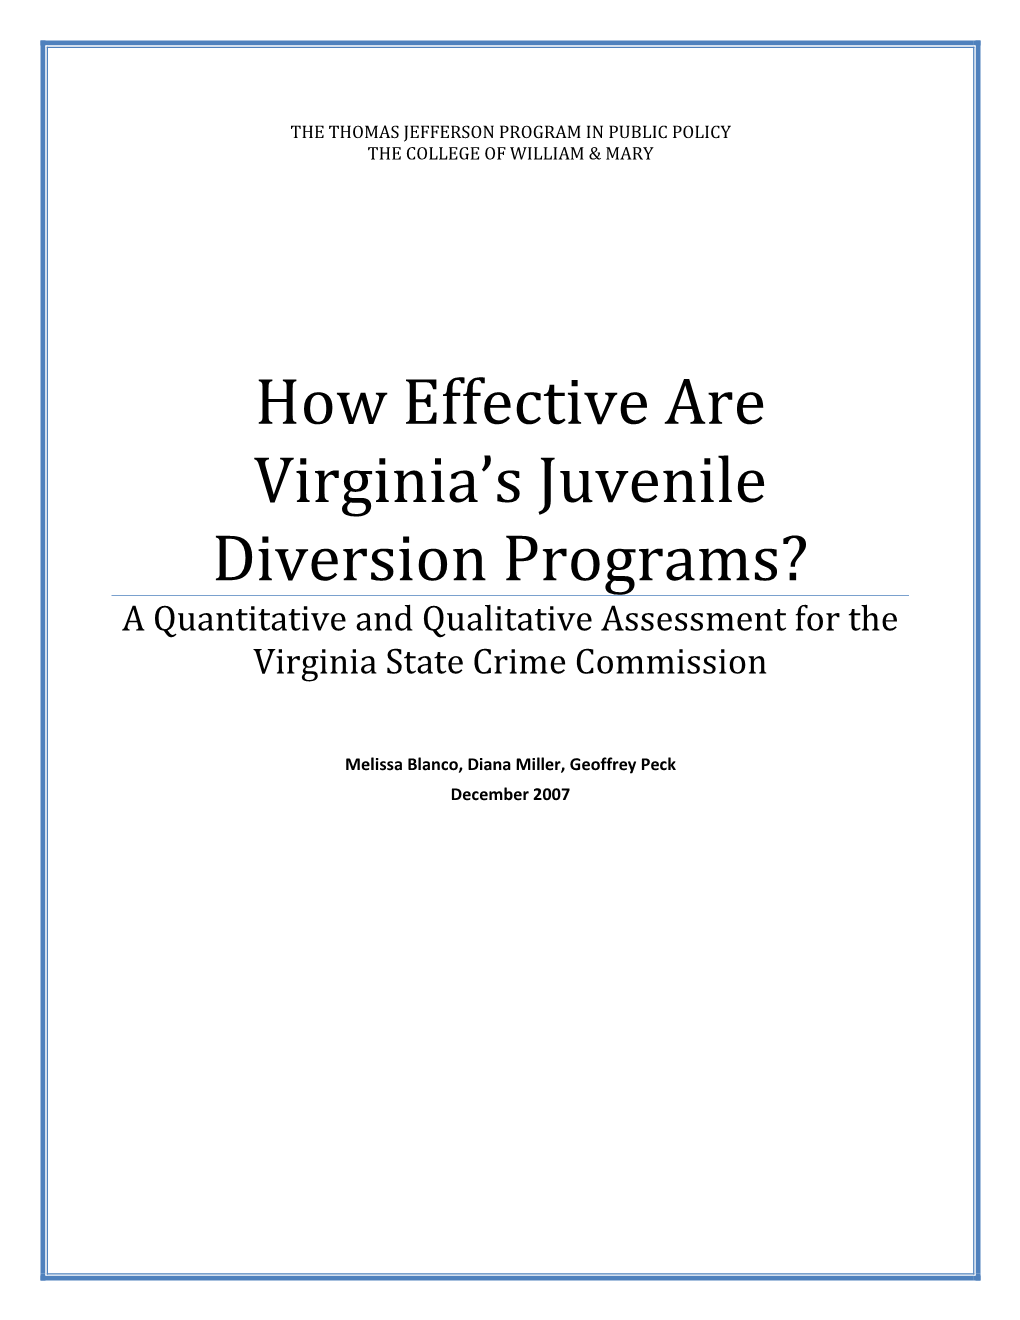 How Effective Are Virginia's Juvenile Diversion Programs?